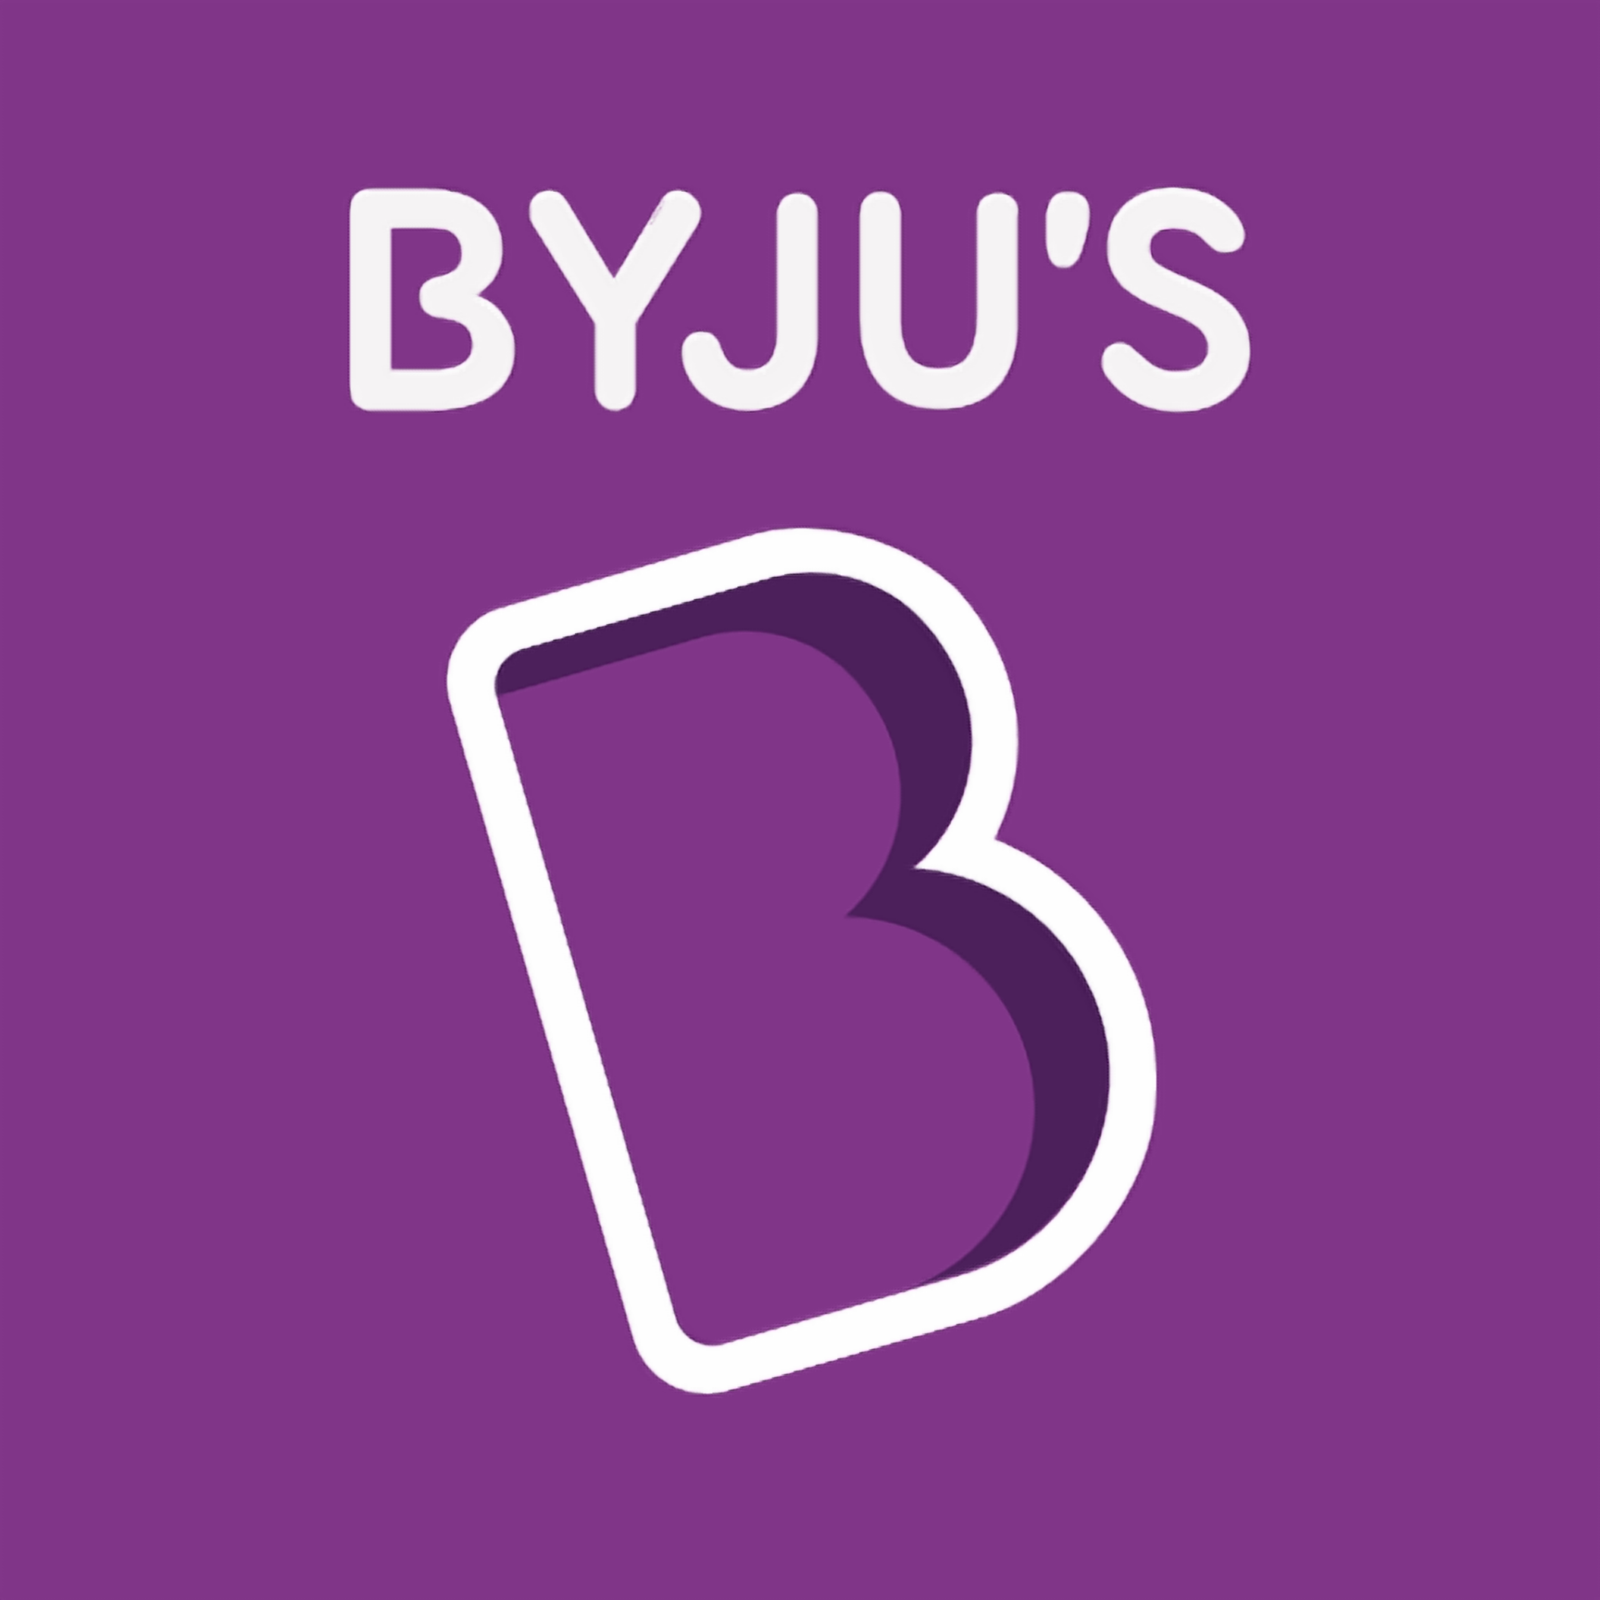 Byjus, Image Credits- Google Play